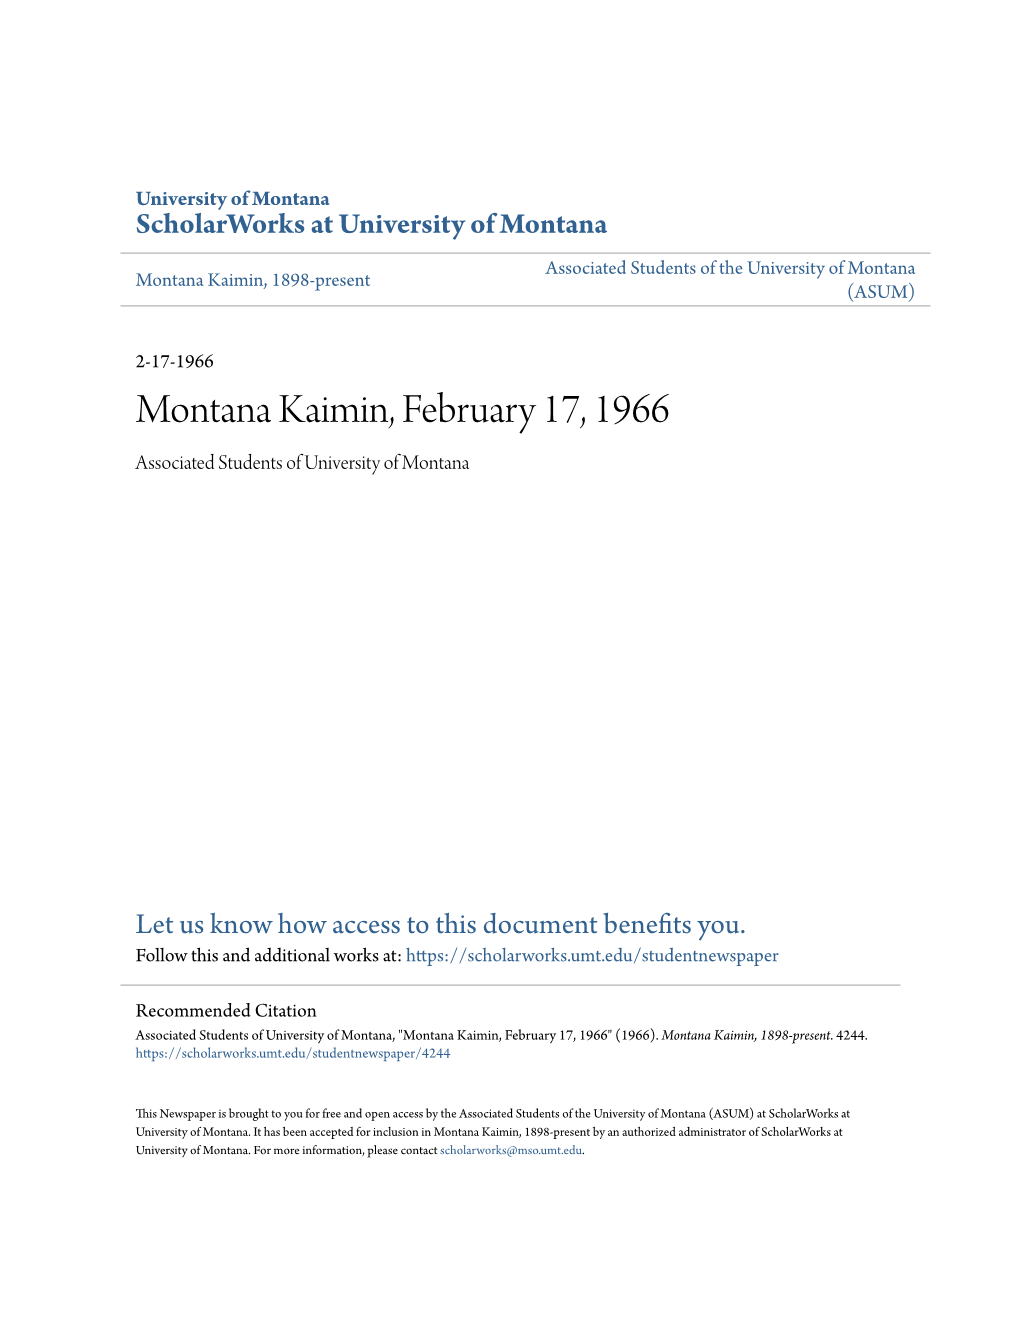 Montana Kaimin, February 17, 1966 Associated Students of University of Montana